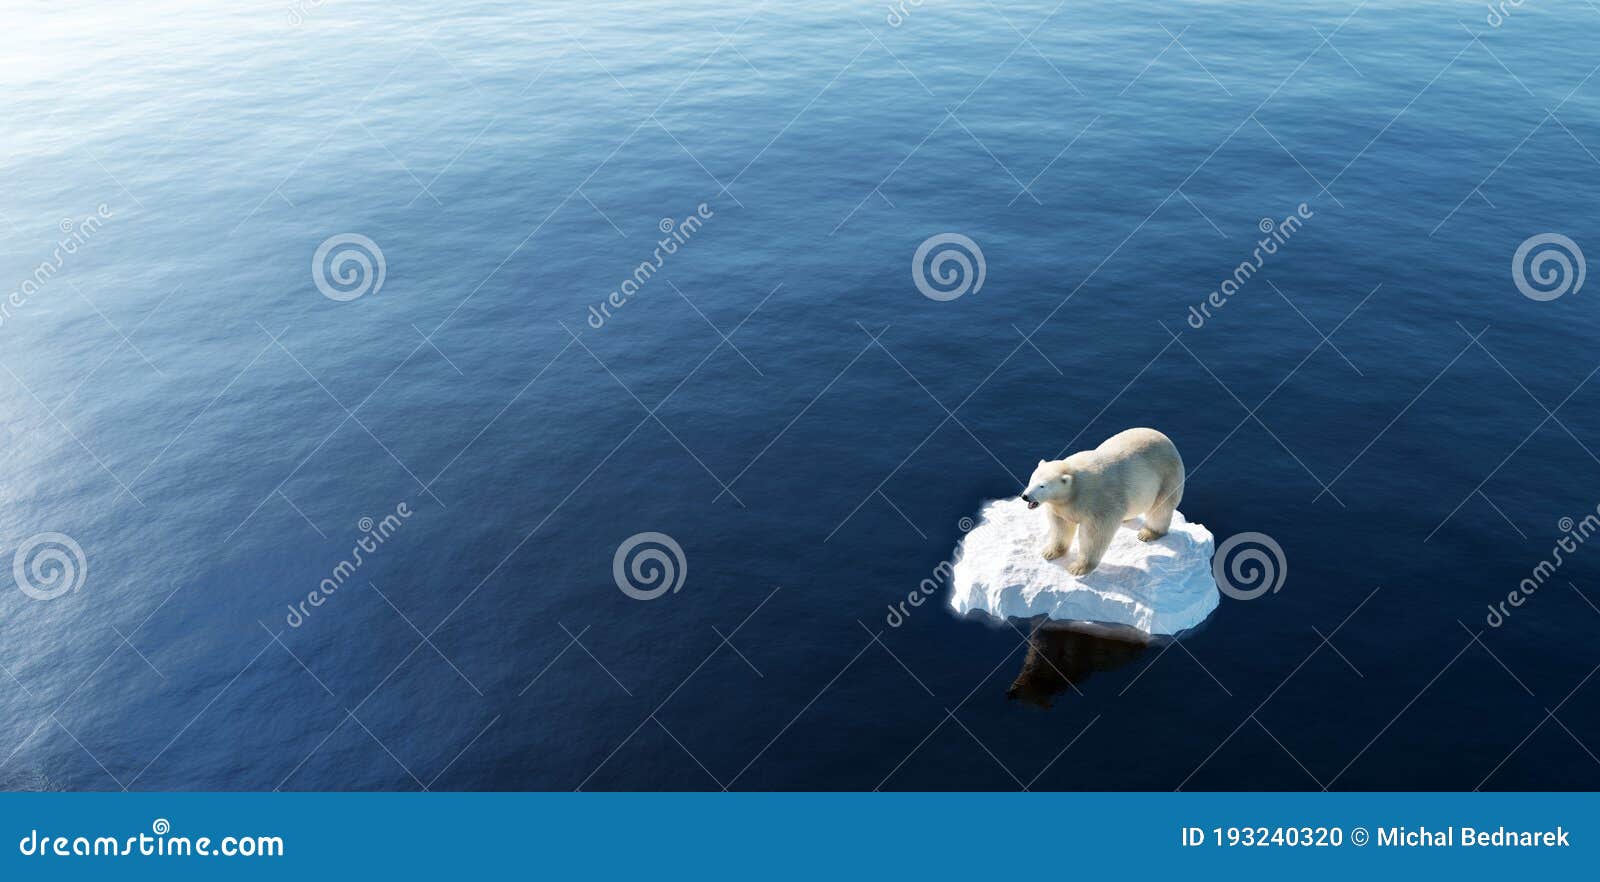 polar bear on ice floe. melting iceberg and global warming